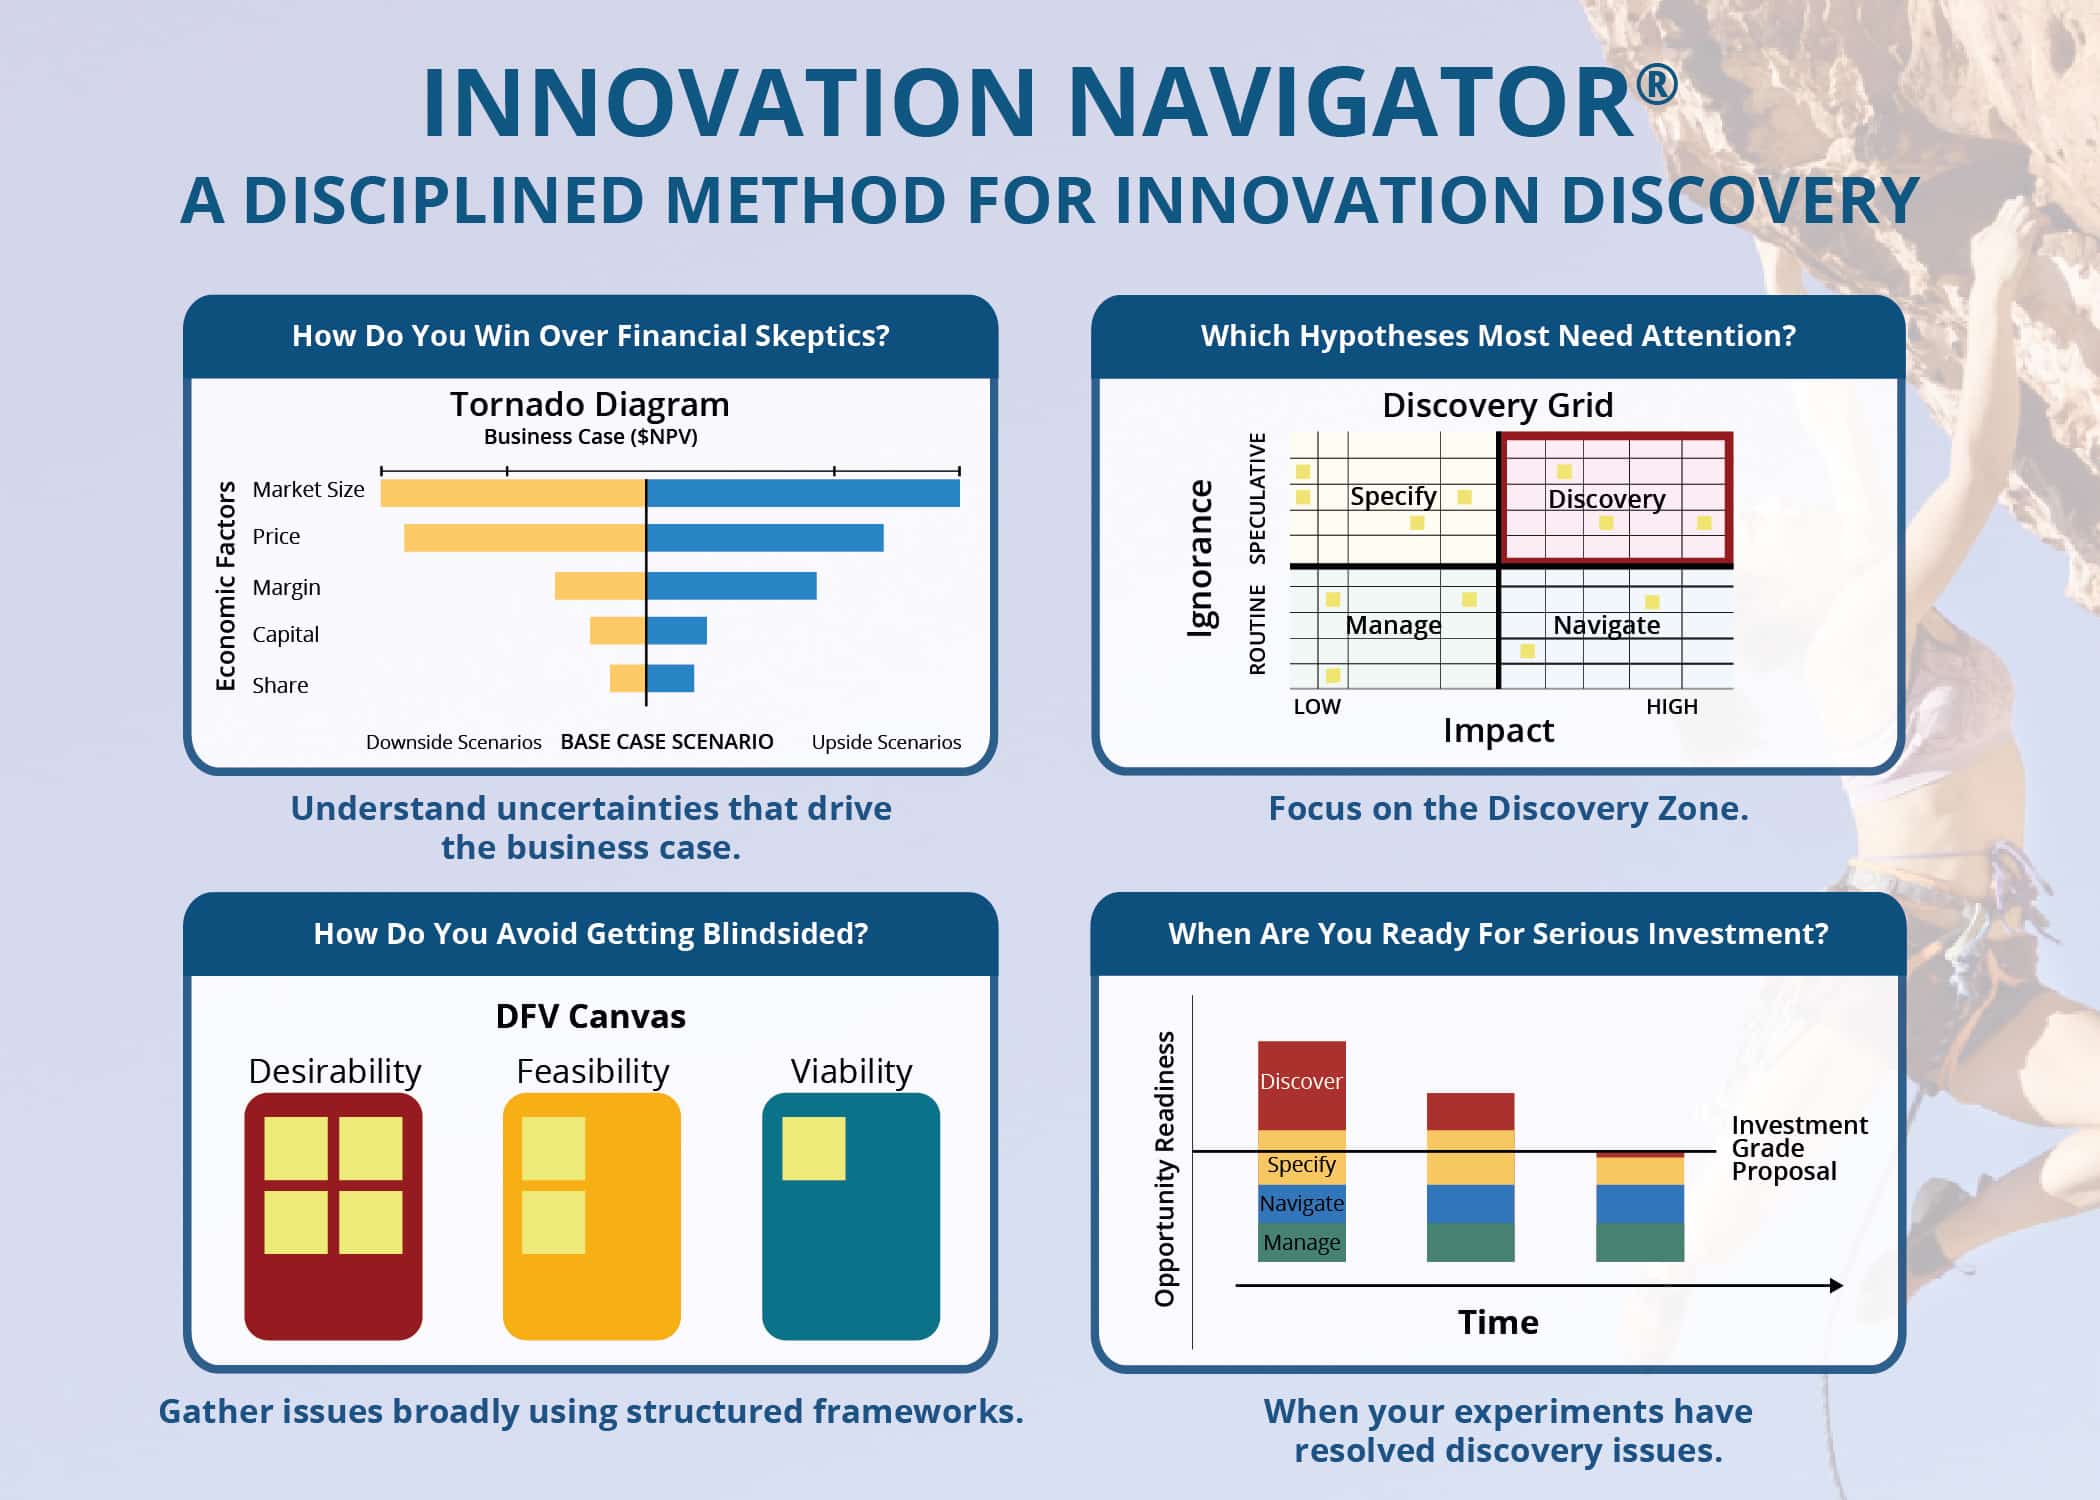 Innovation Navigator, a disciplined method for innovation discovery